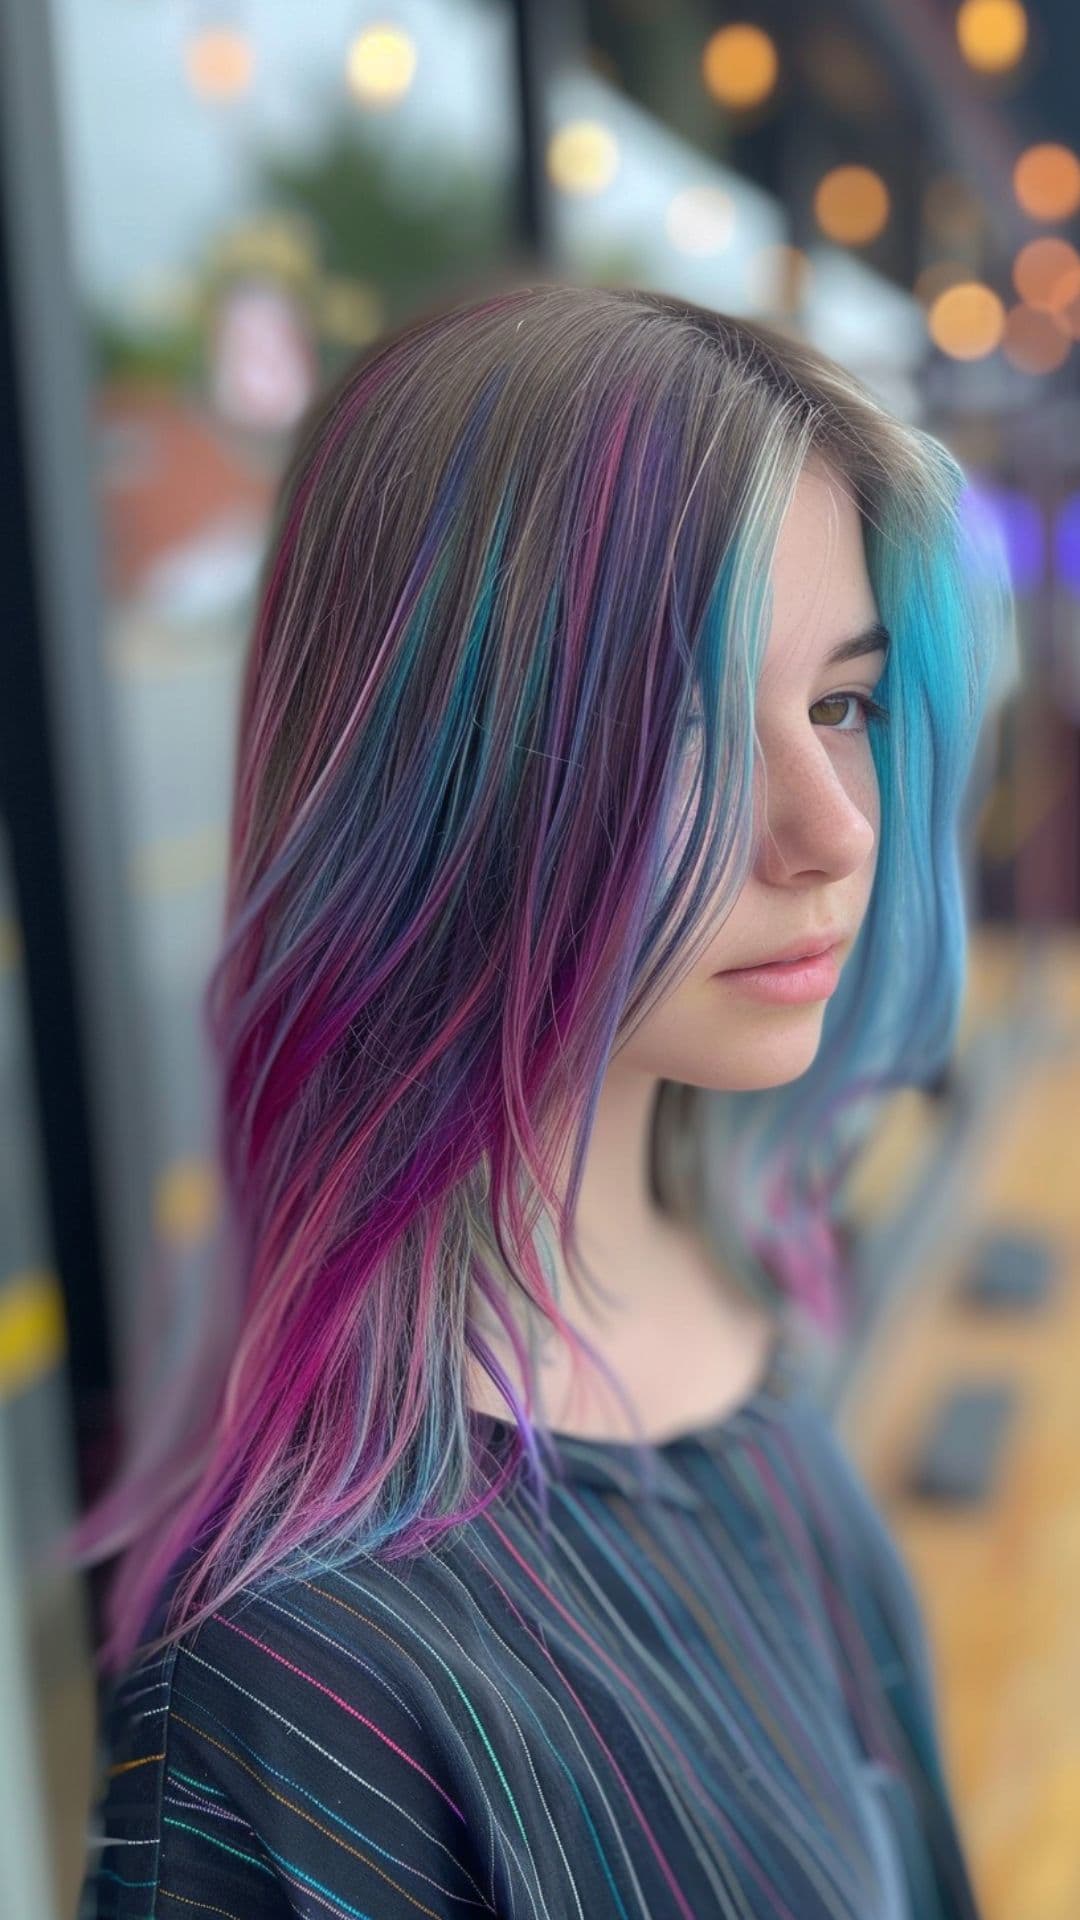 A teen girl modelling a galaxy hair.